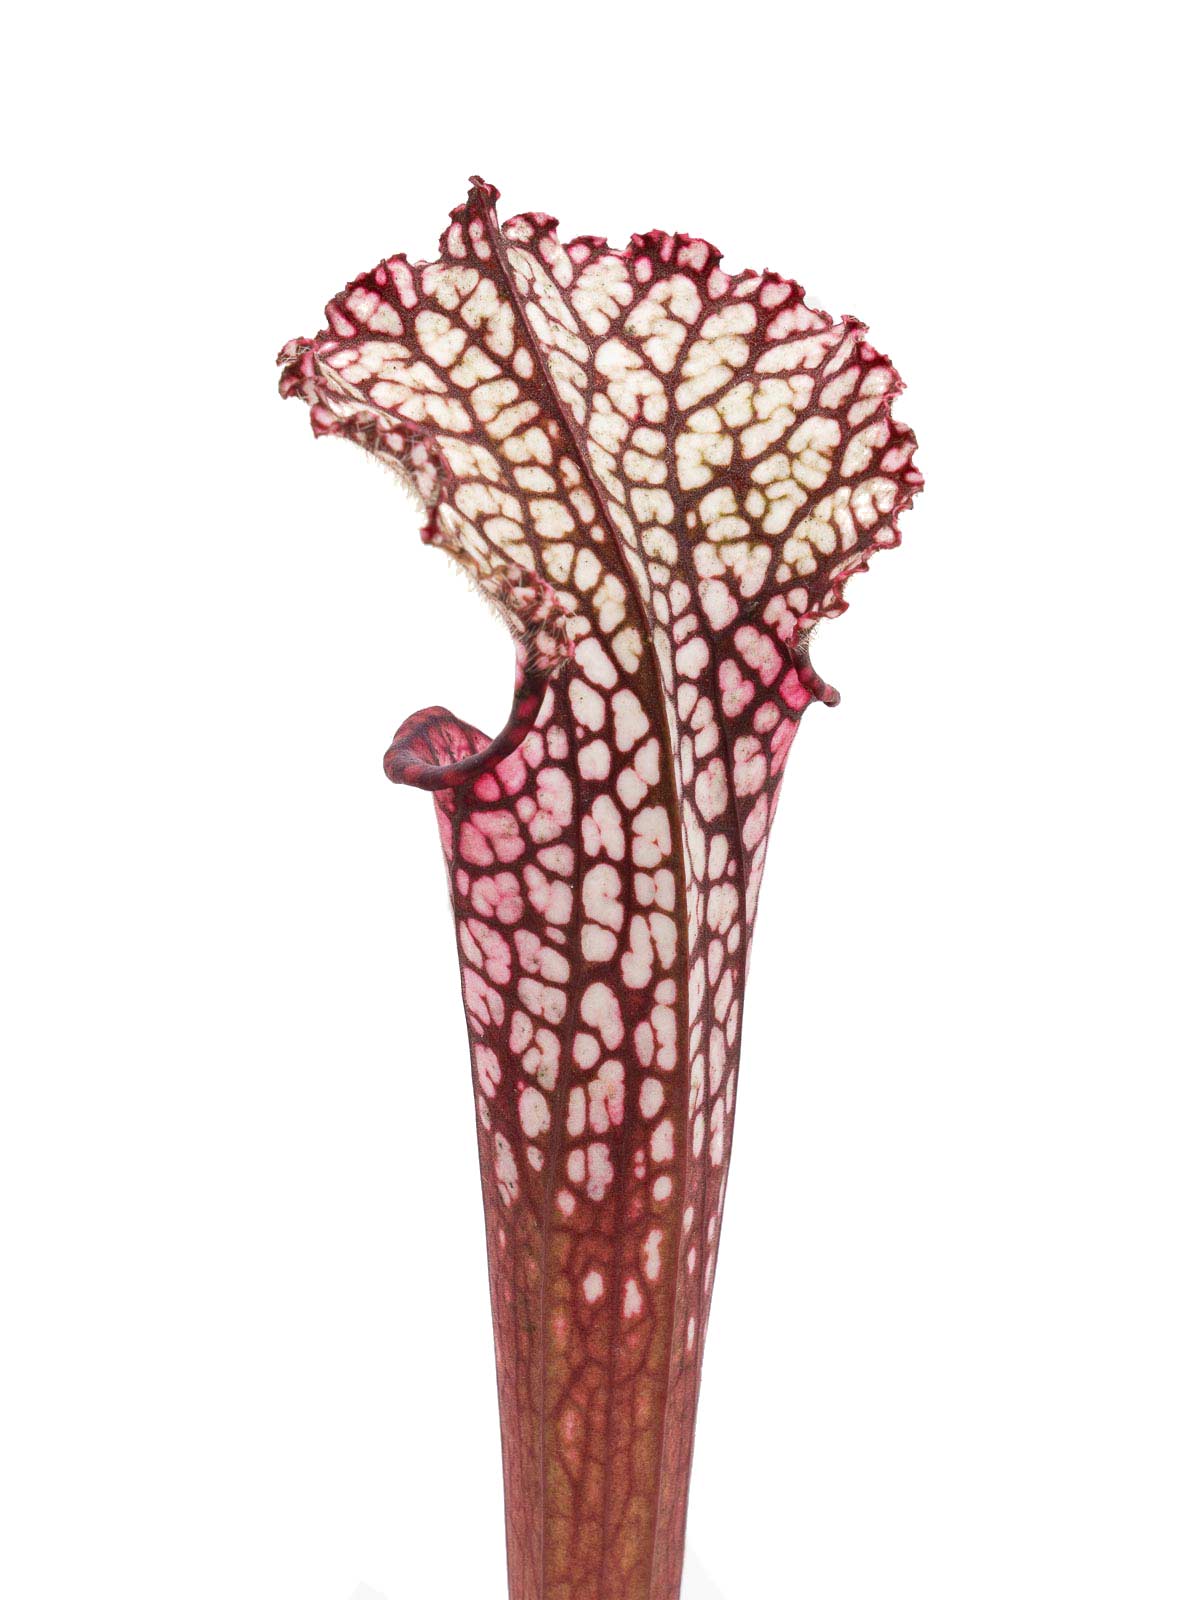 Sarracenia leucophylla - MK L49A, red & pink form, Perdido, Baldwin County, Alabama